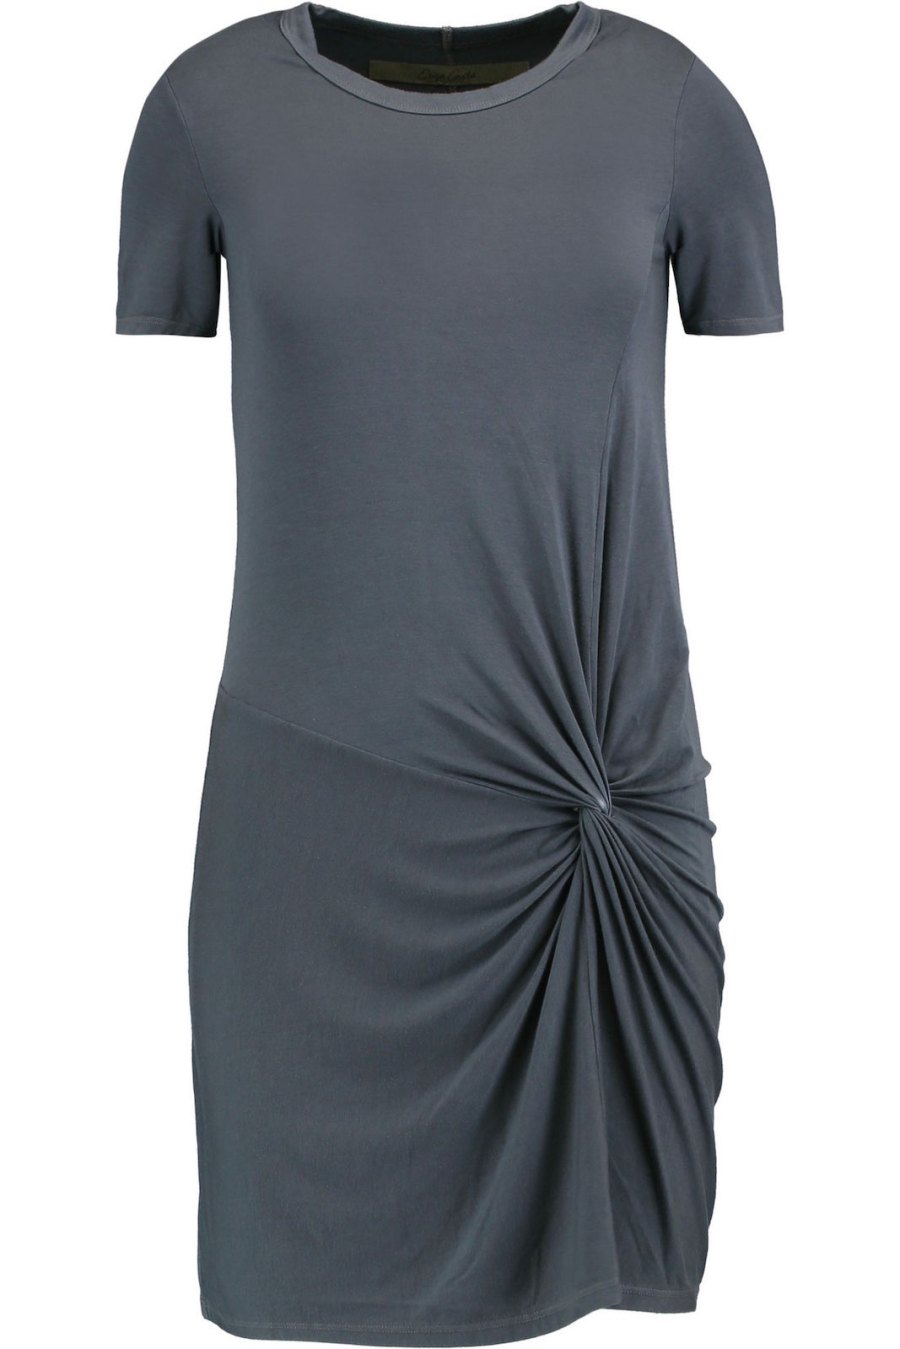 Enza Costa Knotted Stretch-Jersey Mini Dress